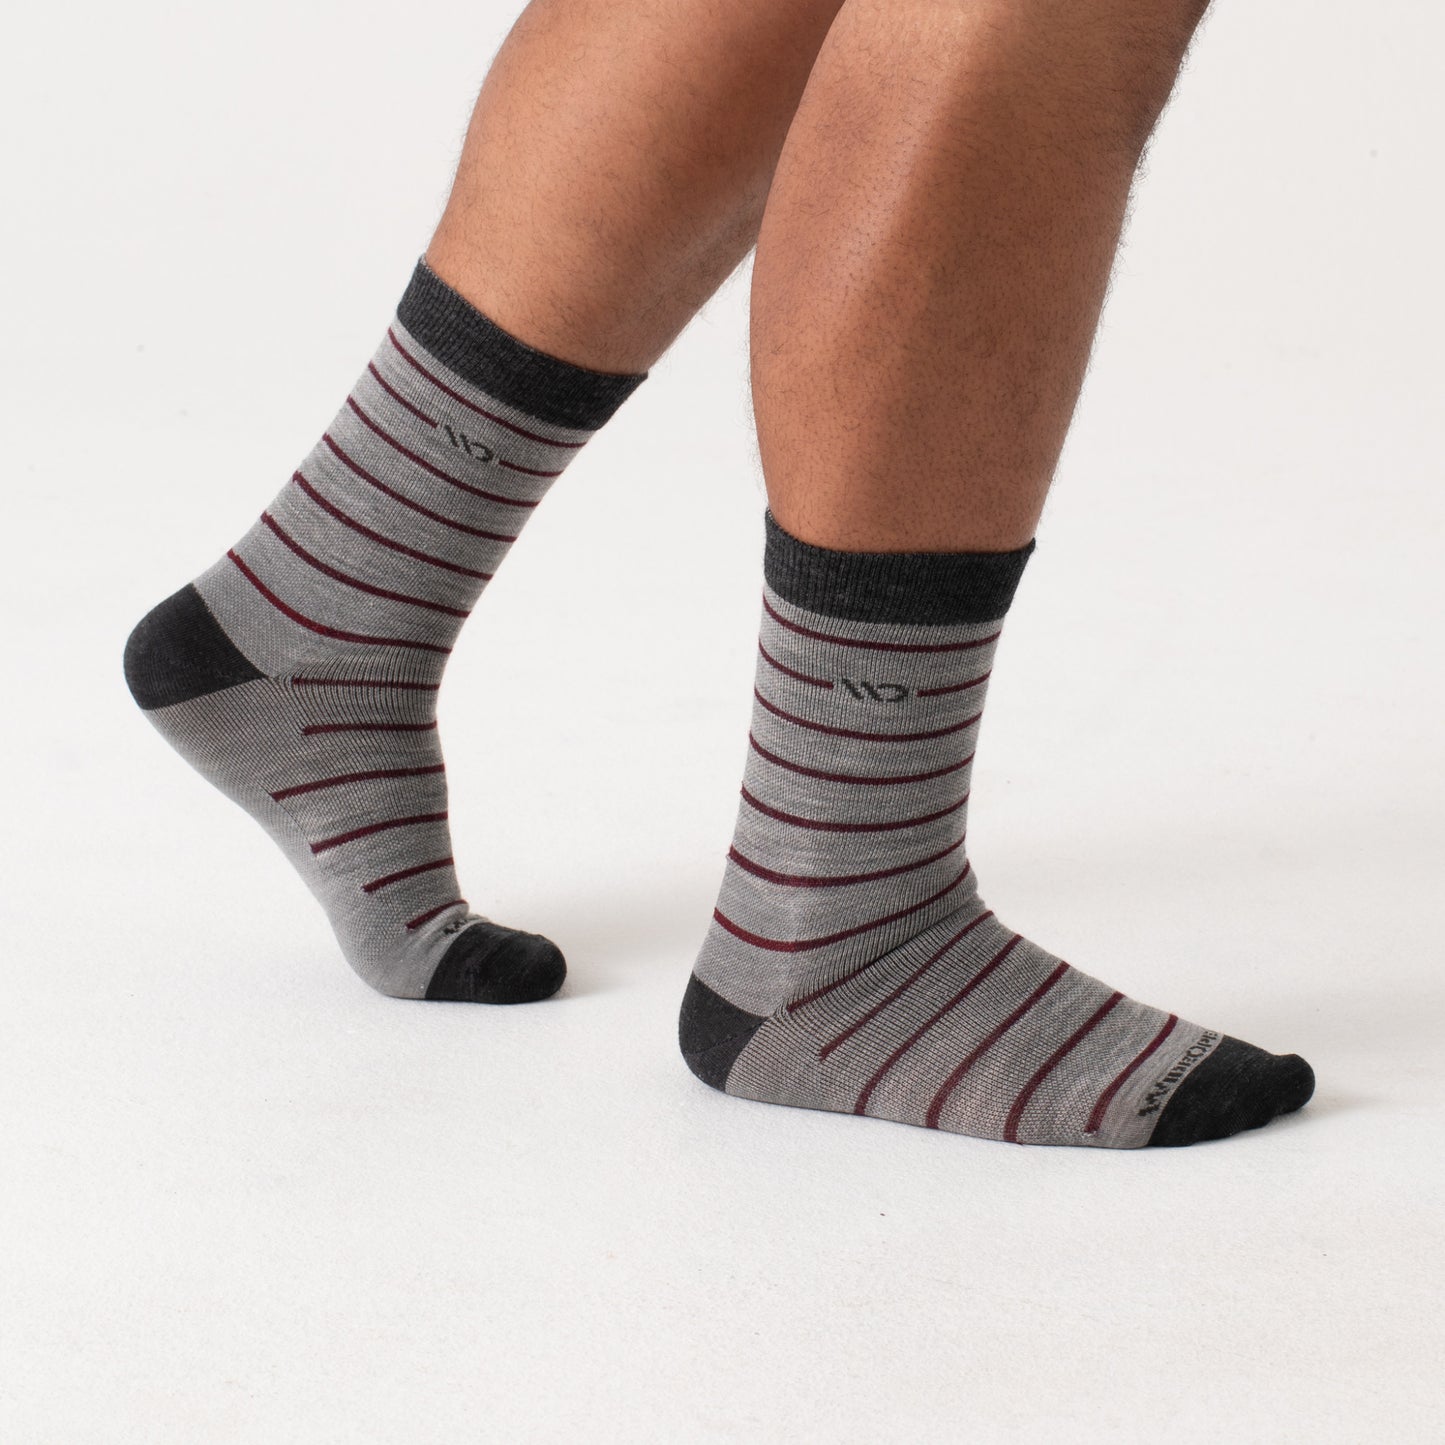 Crew socks on body black heel/toe and logo, light gray body, maroon stripes --Light Gray